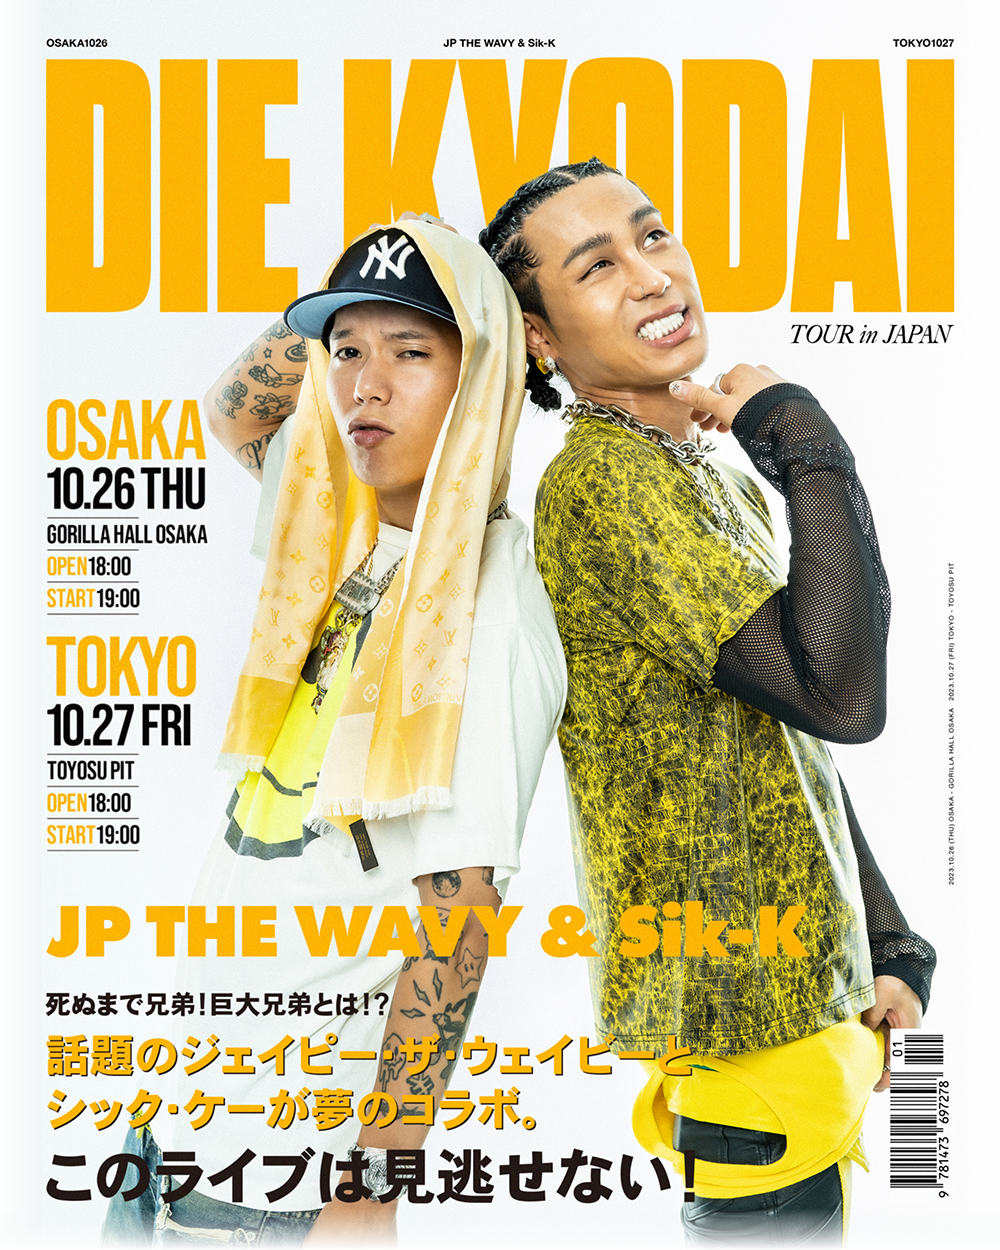 JP THE WAVY & Sik-K “DIE KYODAI TOUR in JAPAN”